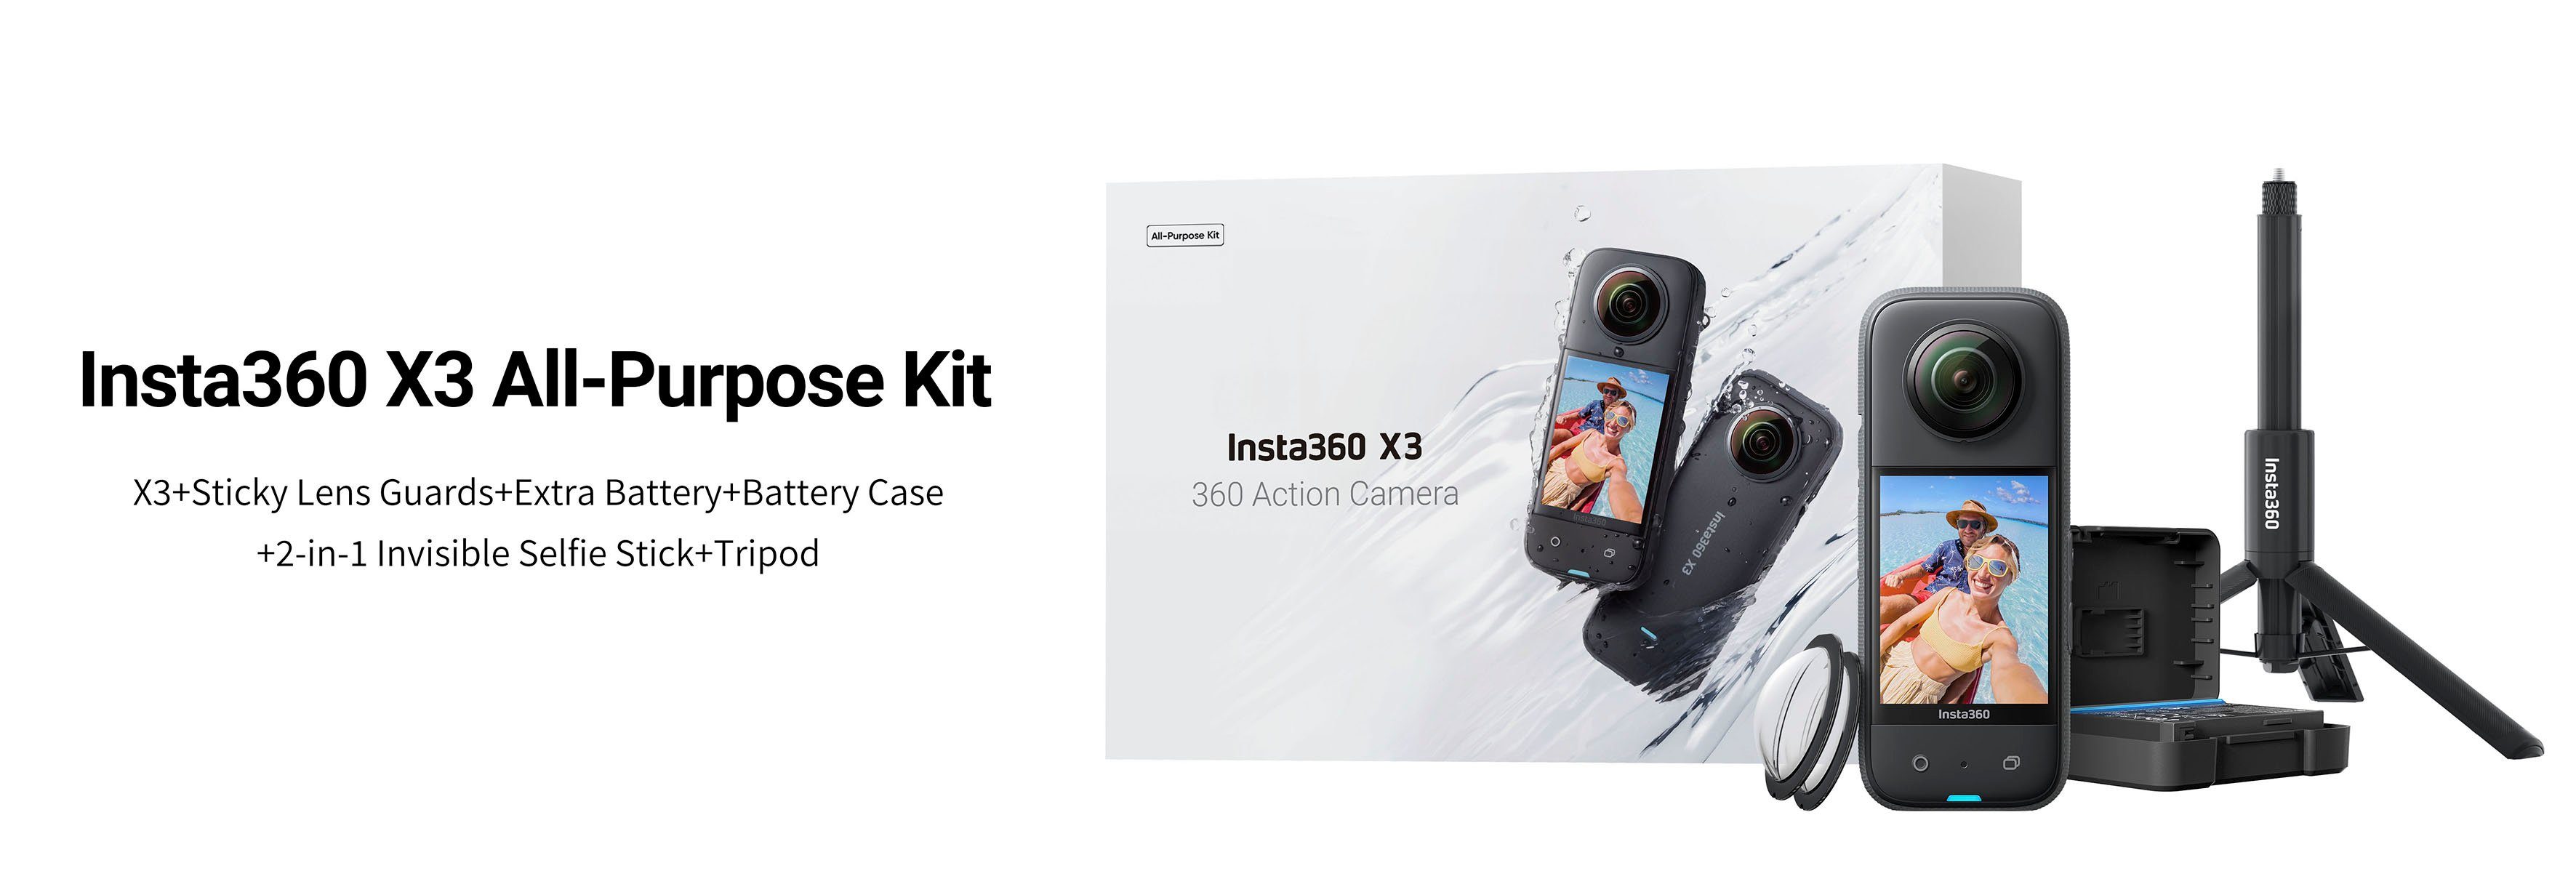 WLAN Kit (Wi-Fi) Insta360 X3 Bluetooth, (5,7K, All-Purpose Camcorder